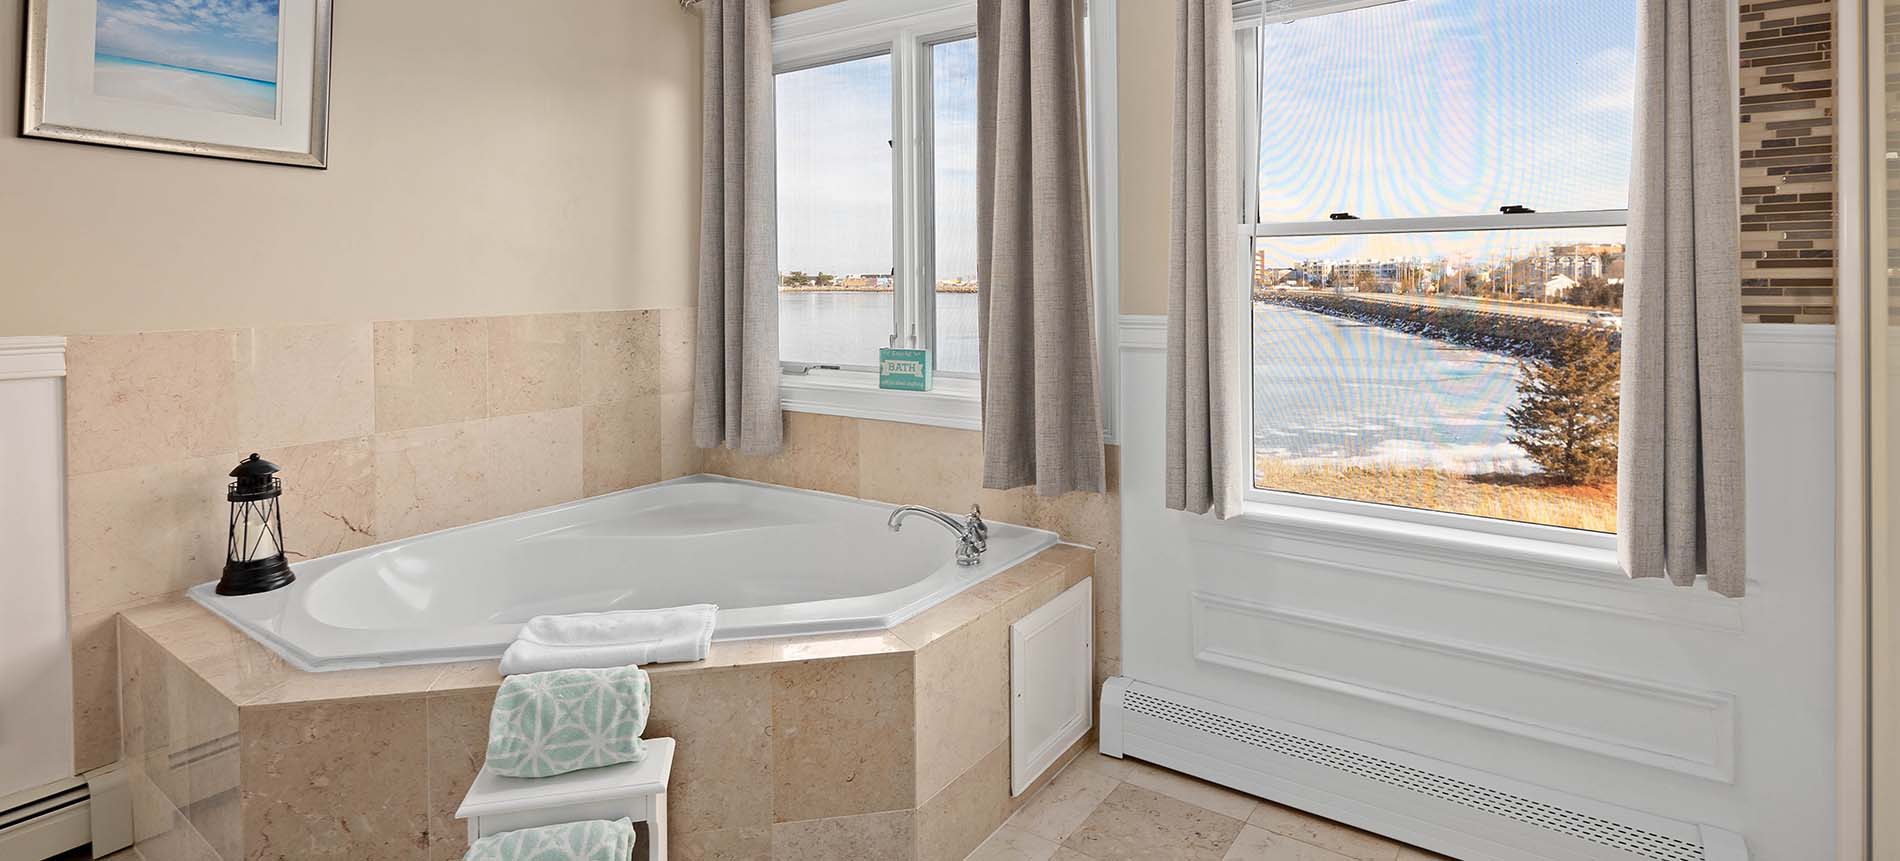 hull ma waterfront hotel bathroom with spa tub